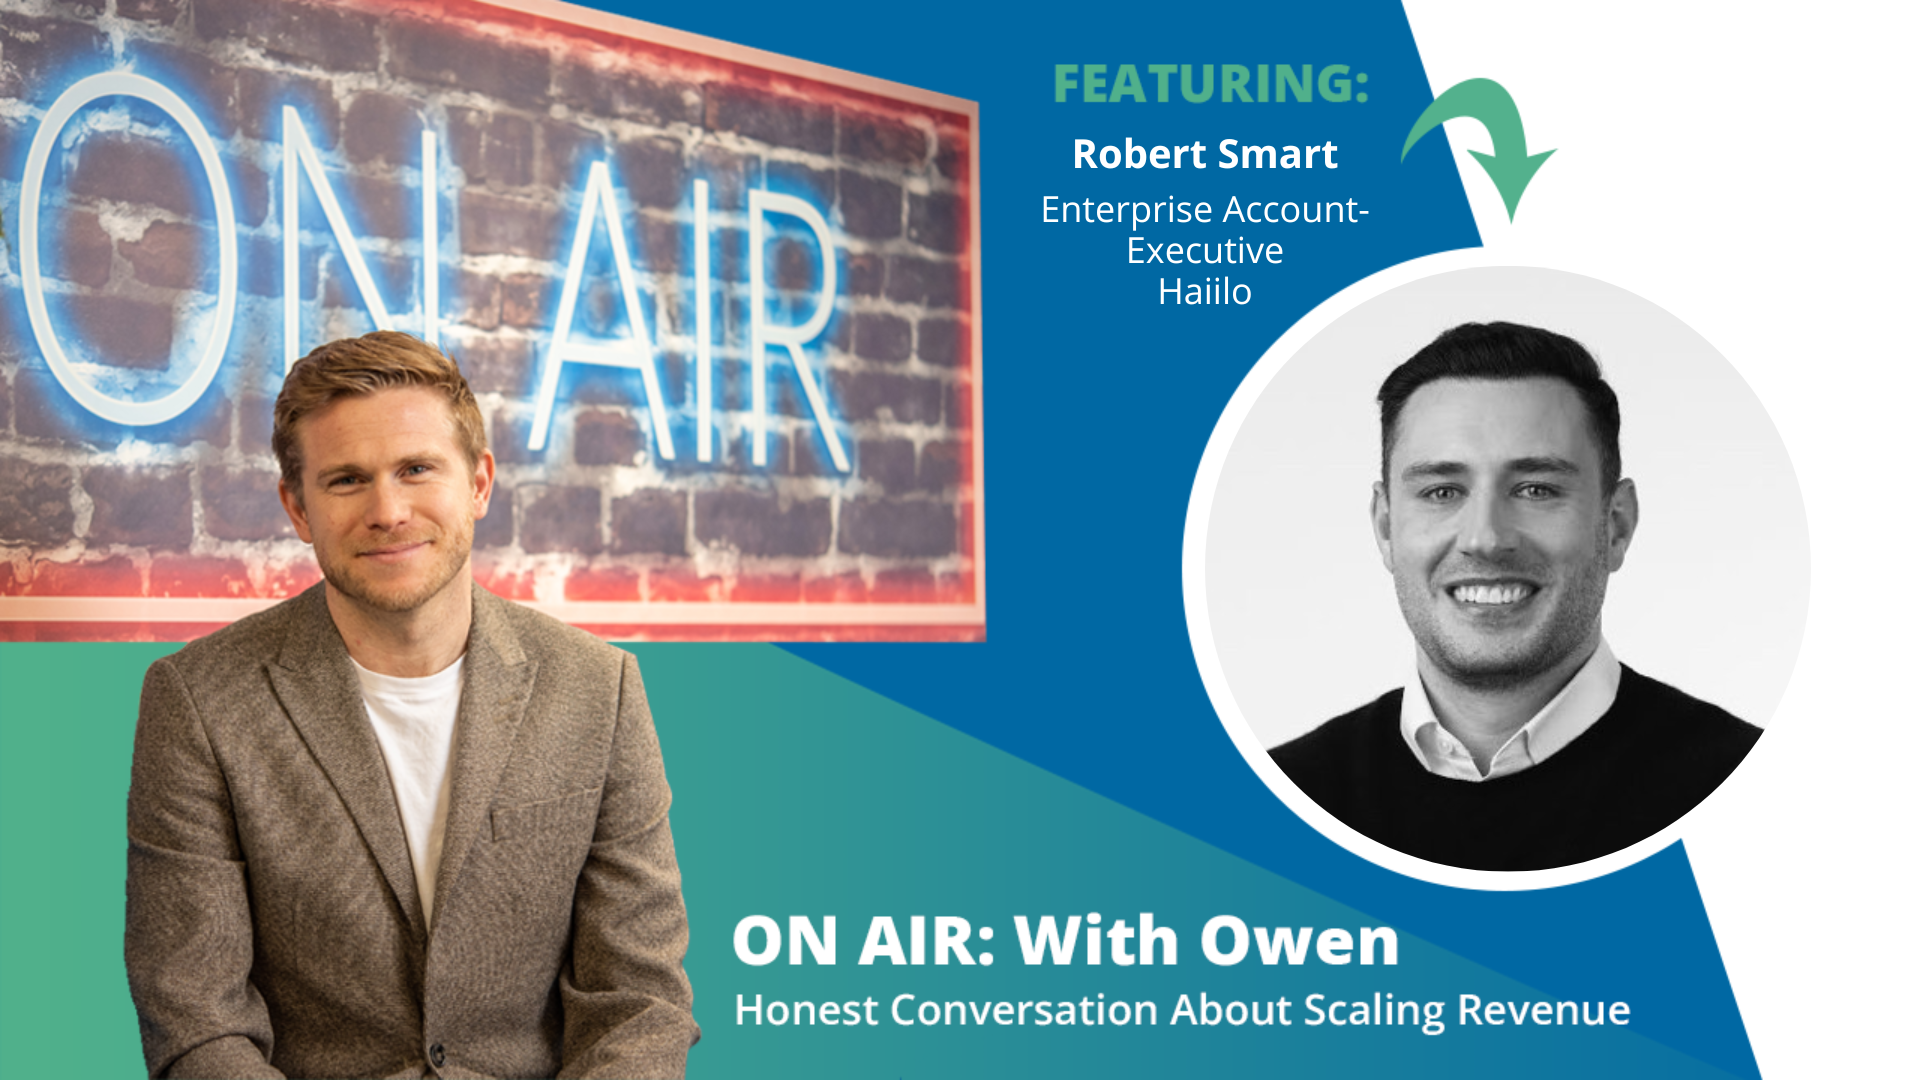 ON AIR: With Owen Episode 69 Featuring Robert Smart – Enterprise Account Executive, Haiilo